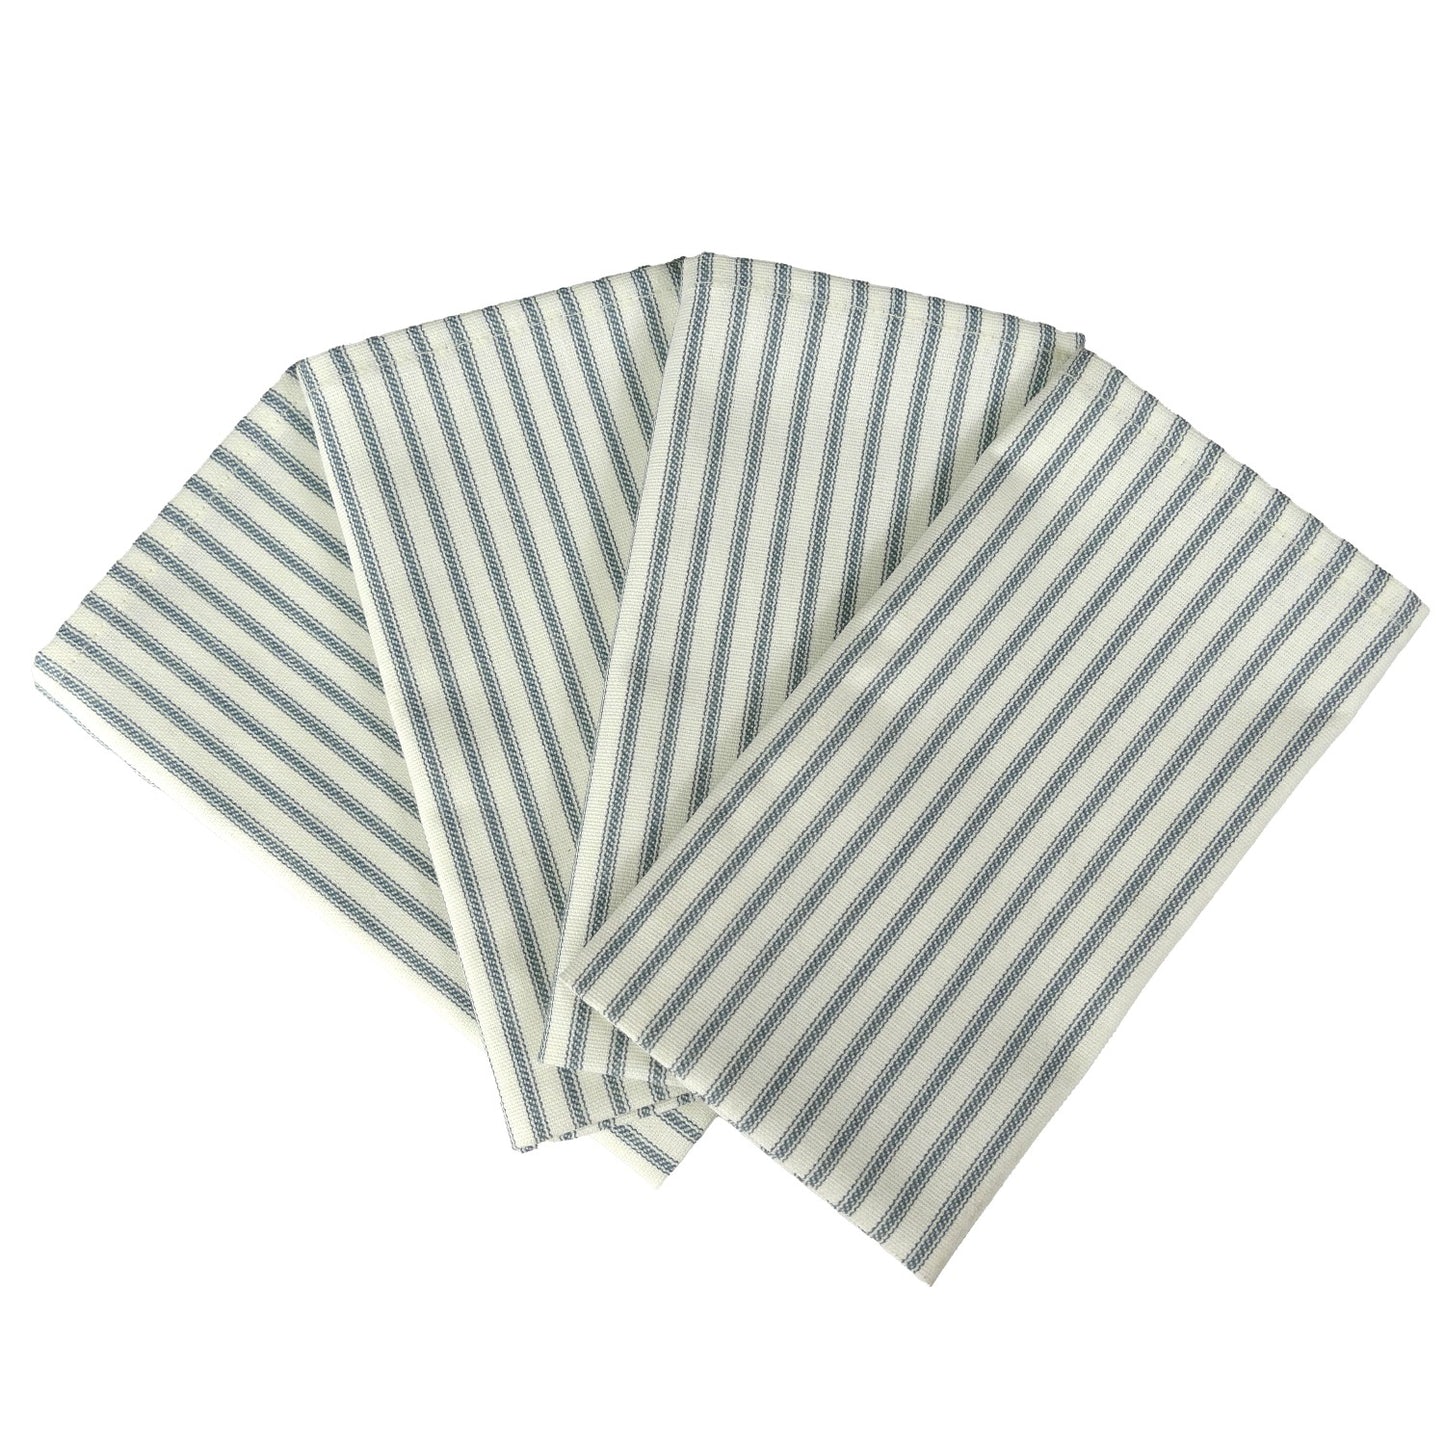 Ticking Stripe Berlin Blue Cloth Napkins Set of 4